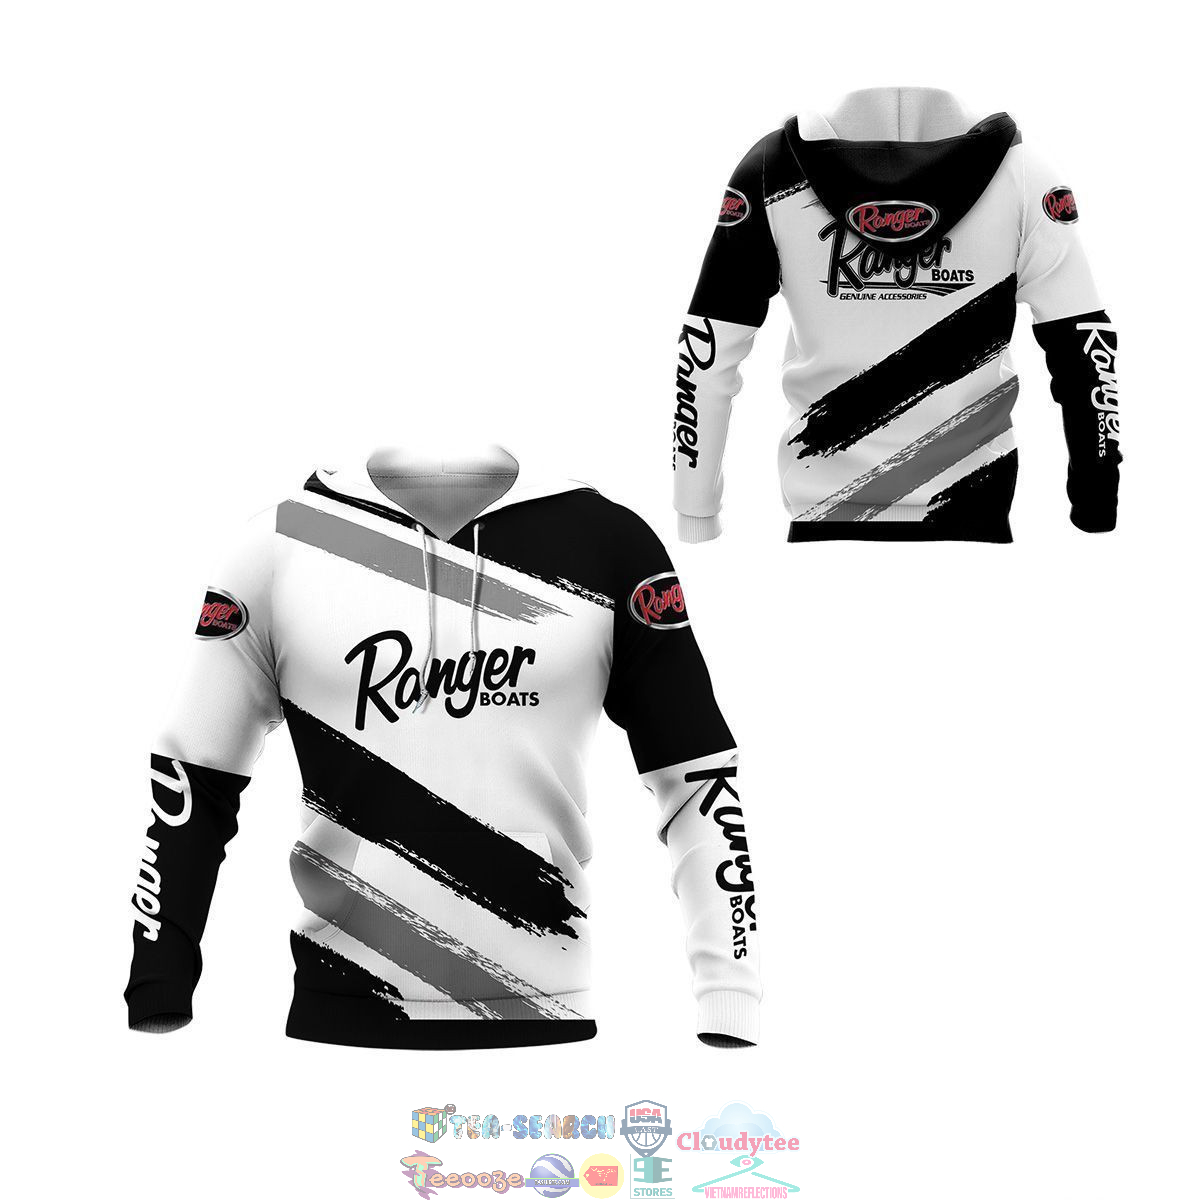 Ranger Boats ver 7 3D hoodie and t-shirt – Saleoff